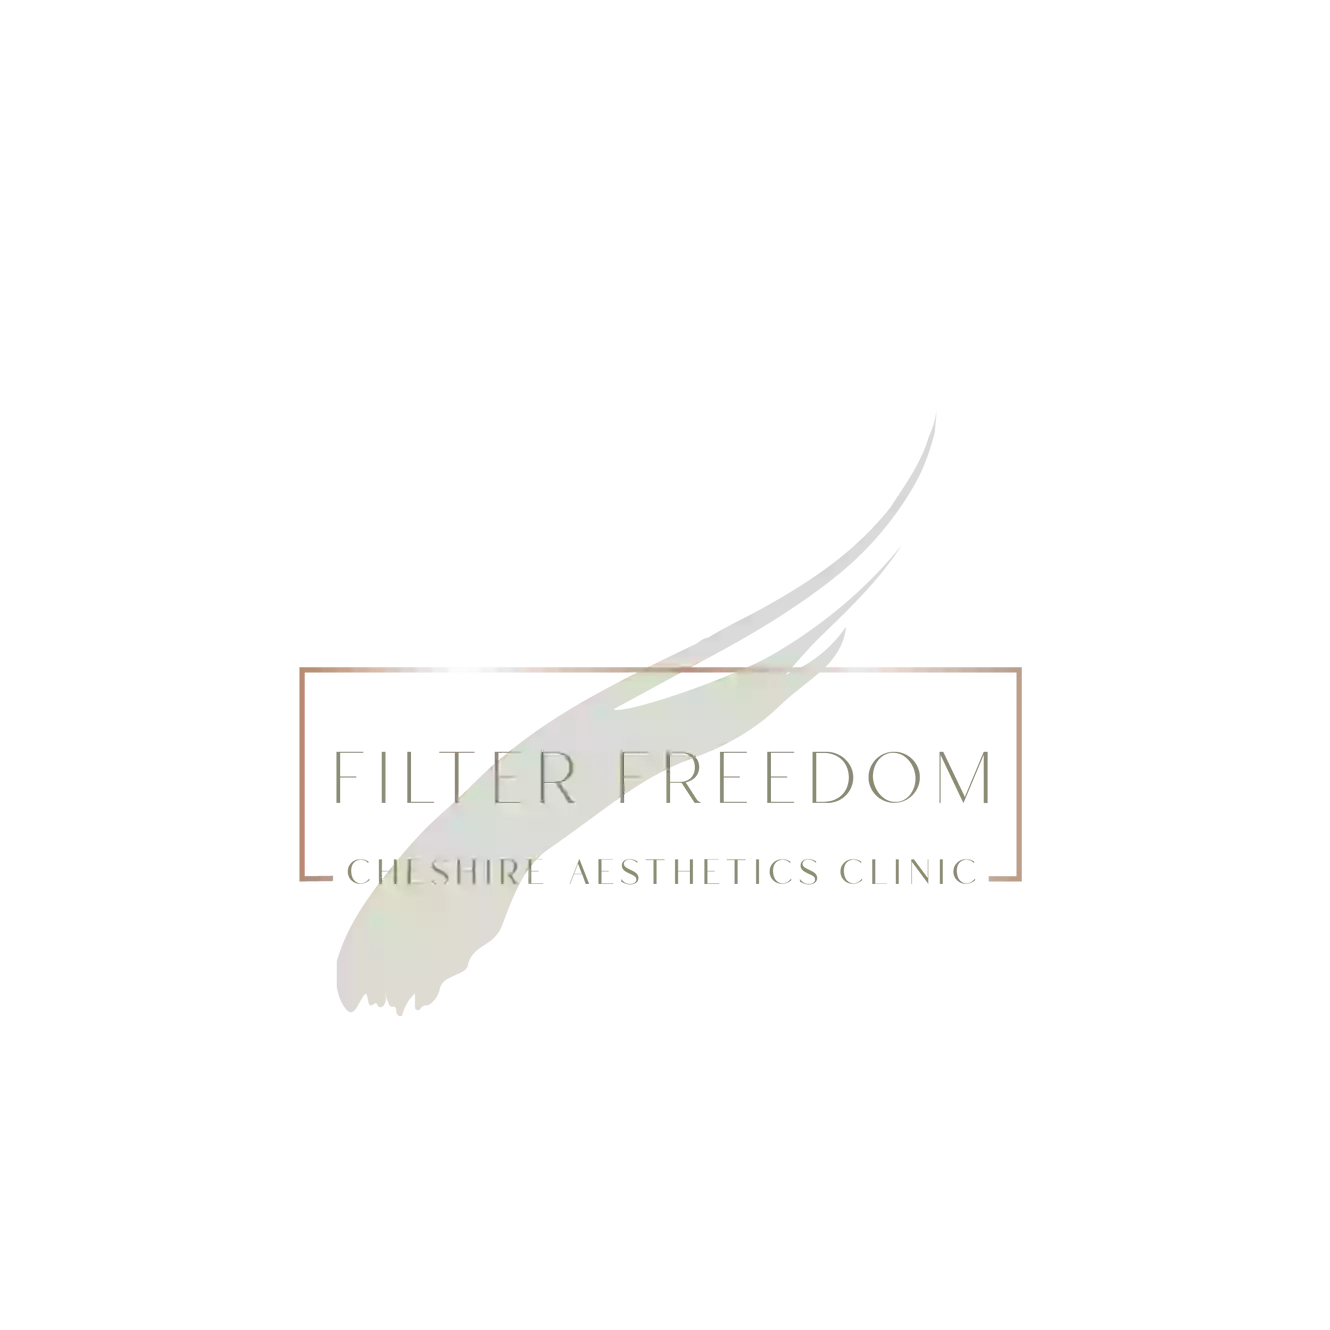 Filter Freedom Aesthetics Clinic